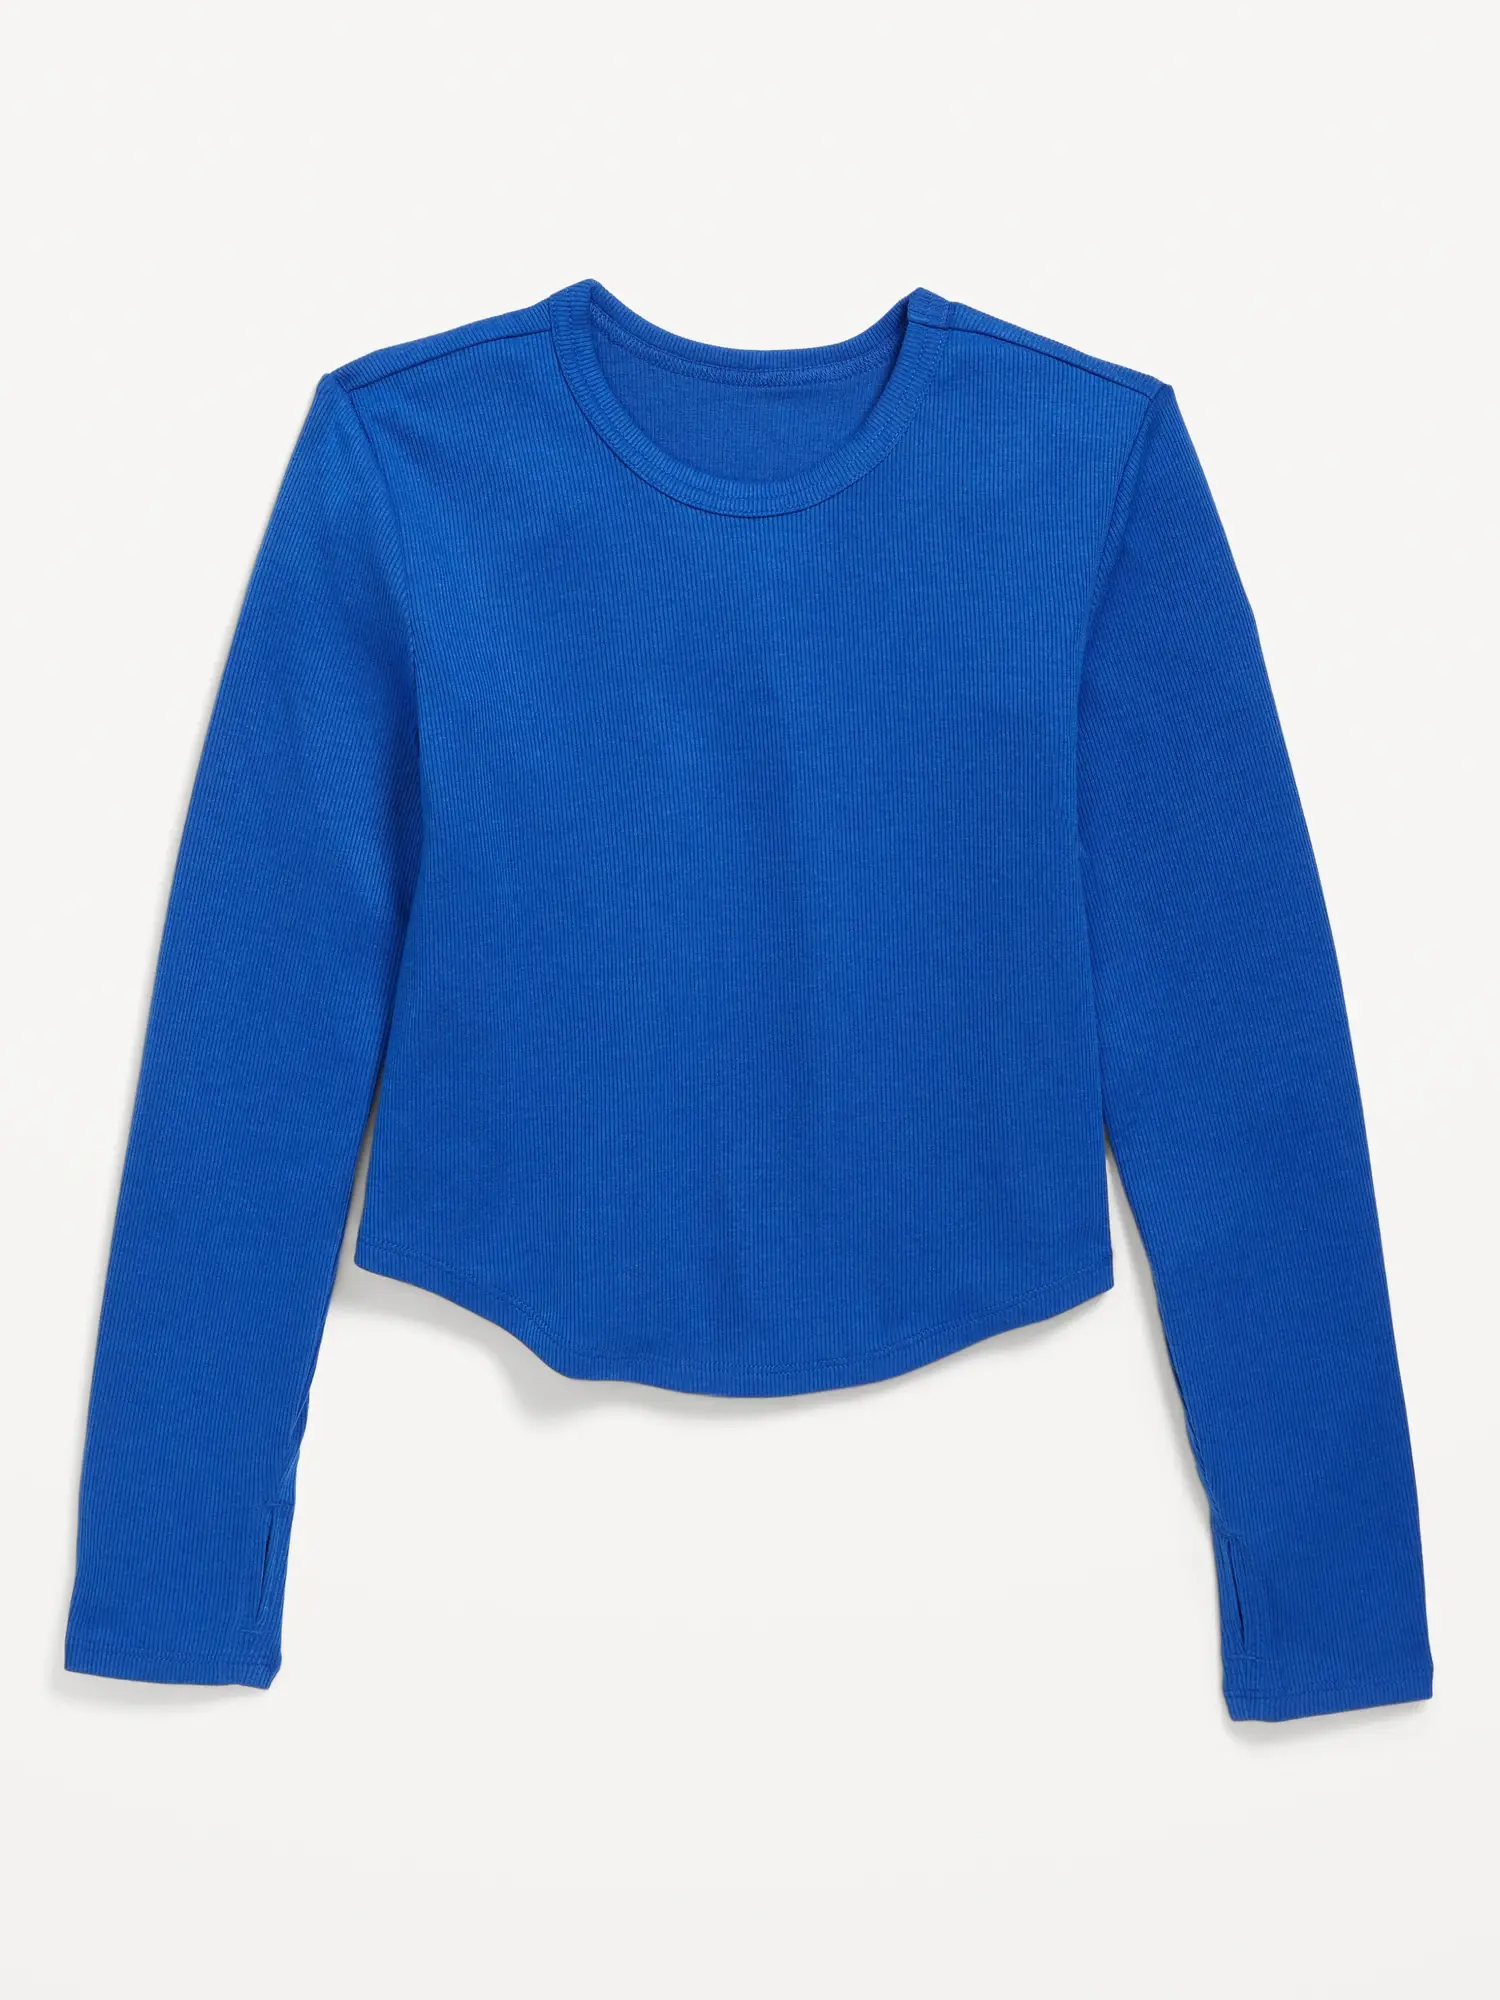 Old Navy UltraLite Long-Sleeve Rib-Knit T-Shirt for Girls blue. 1